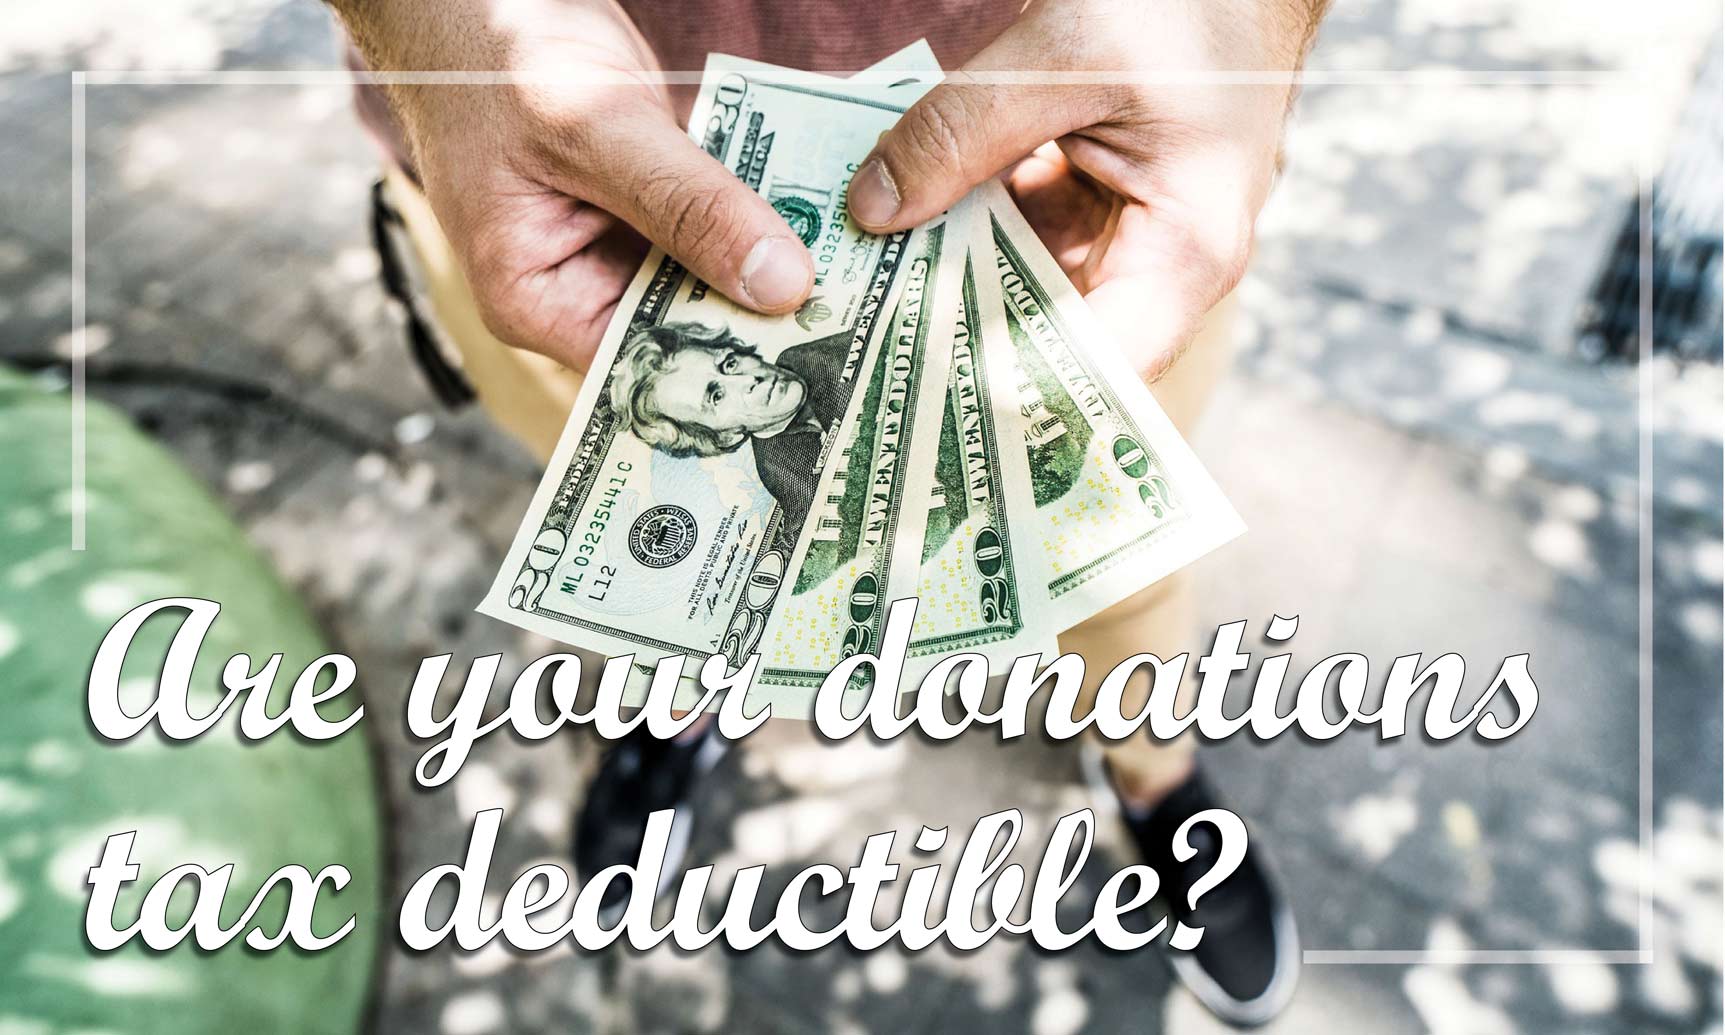 Deductible donations